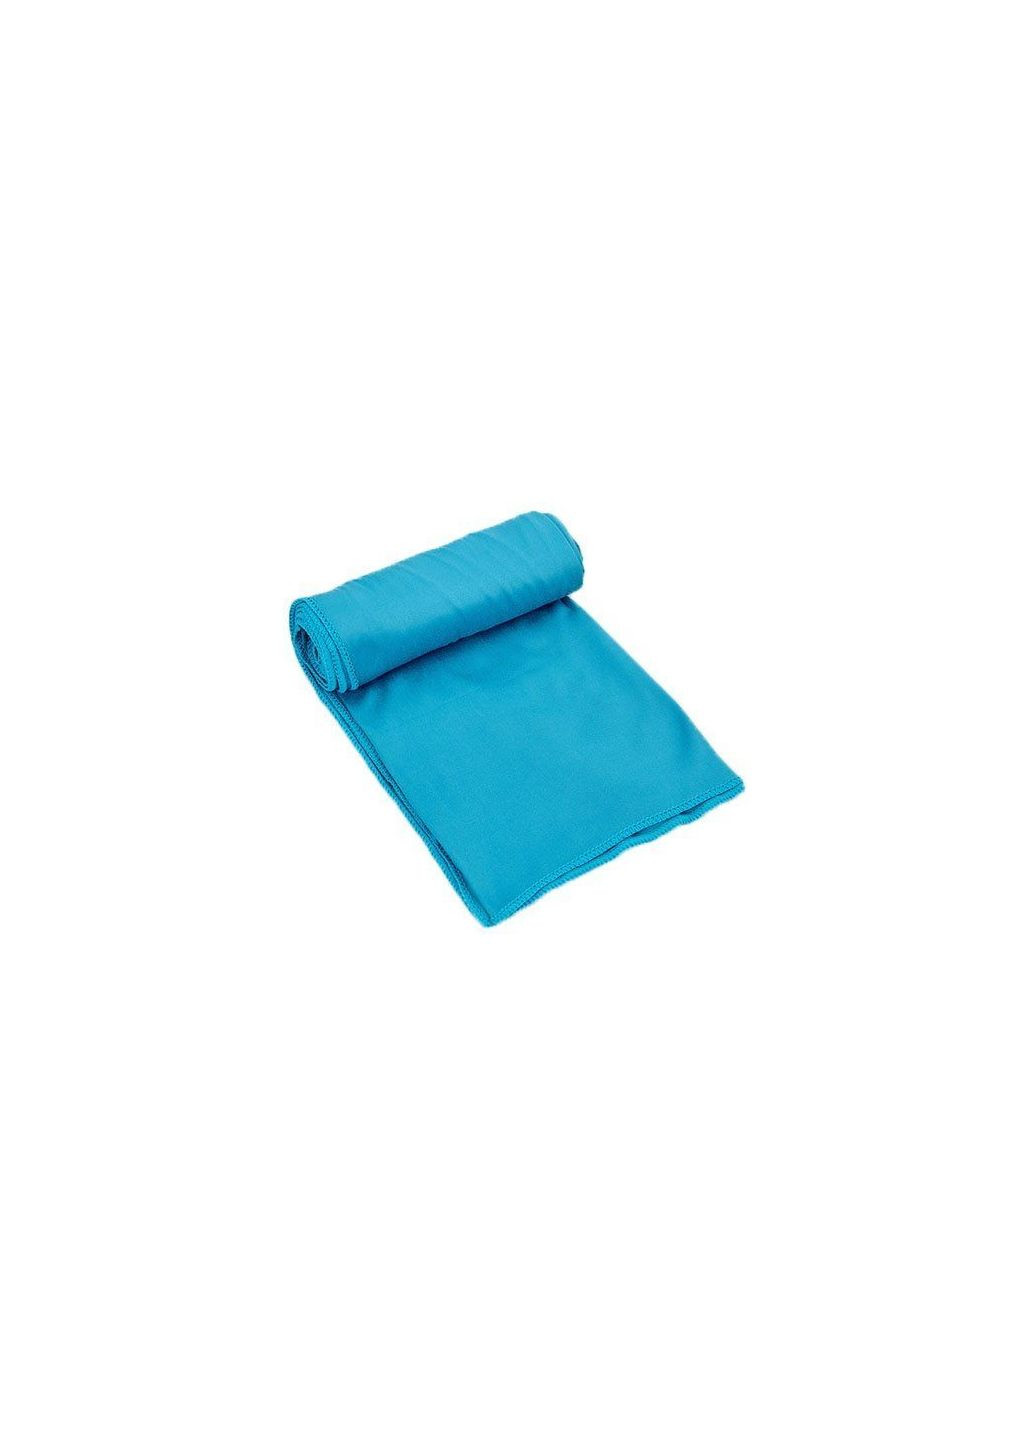 4monster полотенце спортивное fryfast синий (33622011) комбинированный производство -